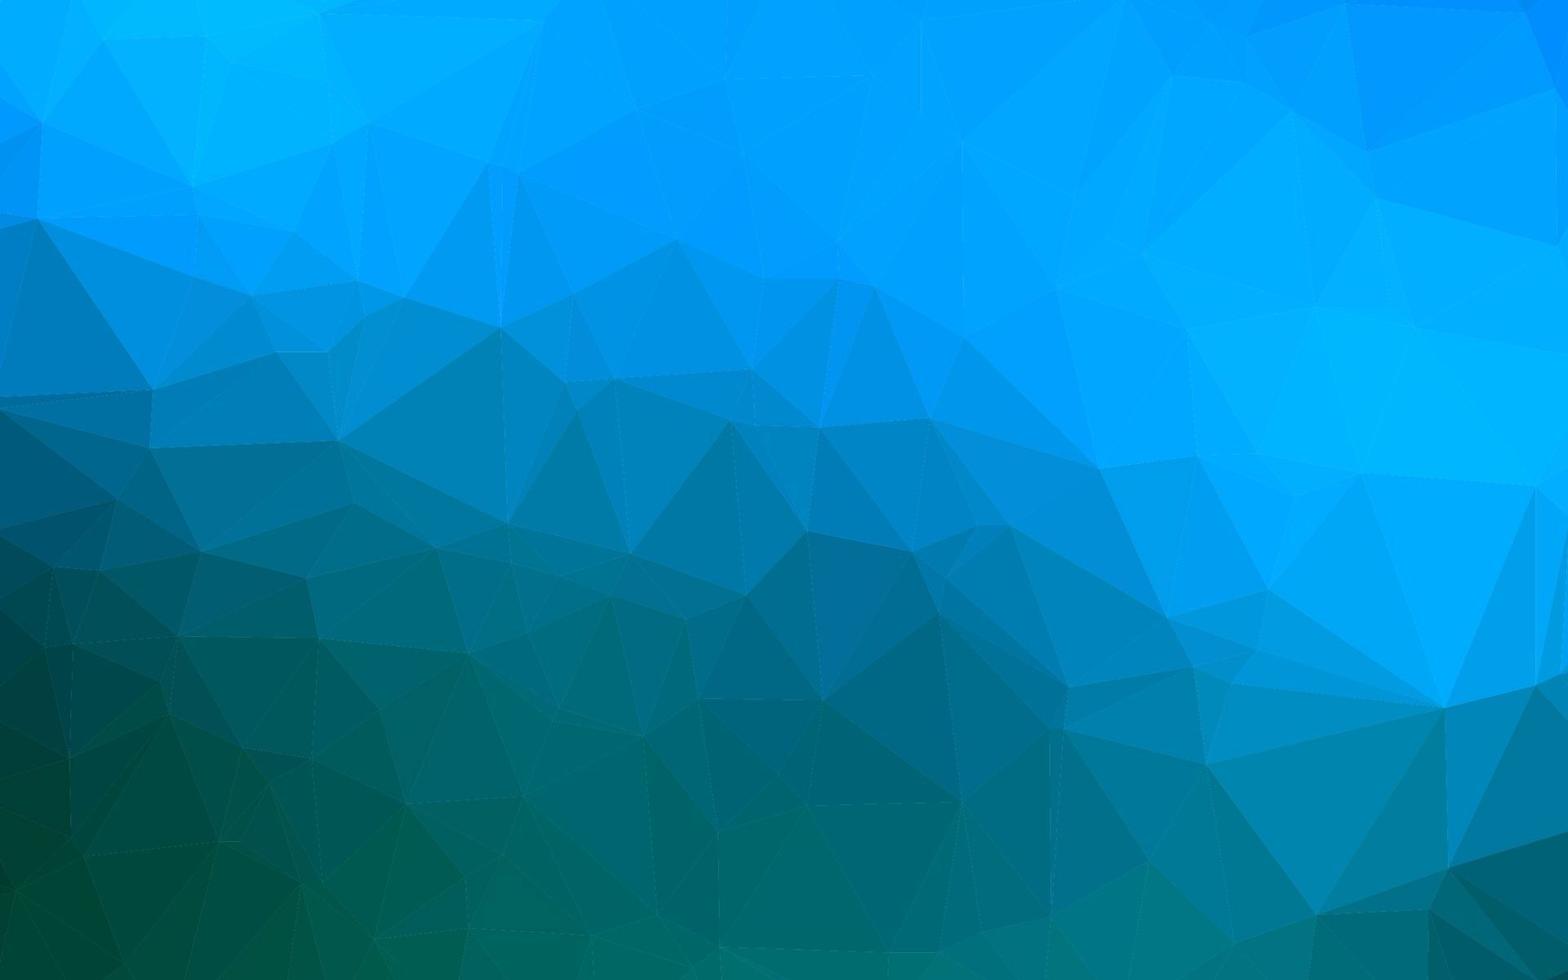 capa poligonal do sumário do vetor azul claro.